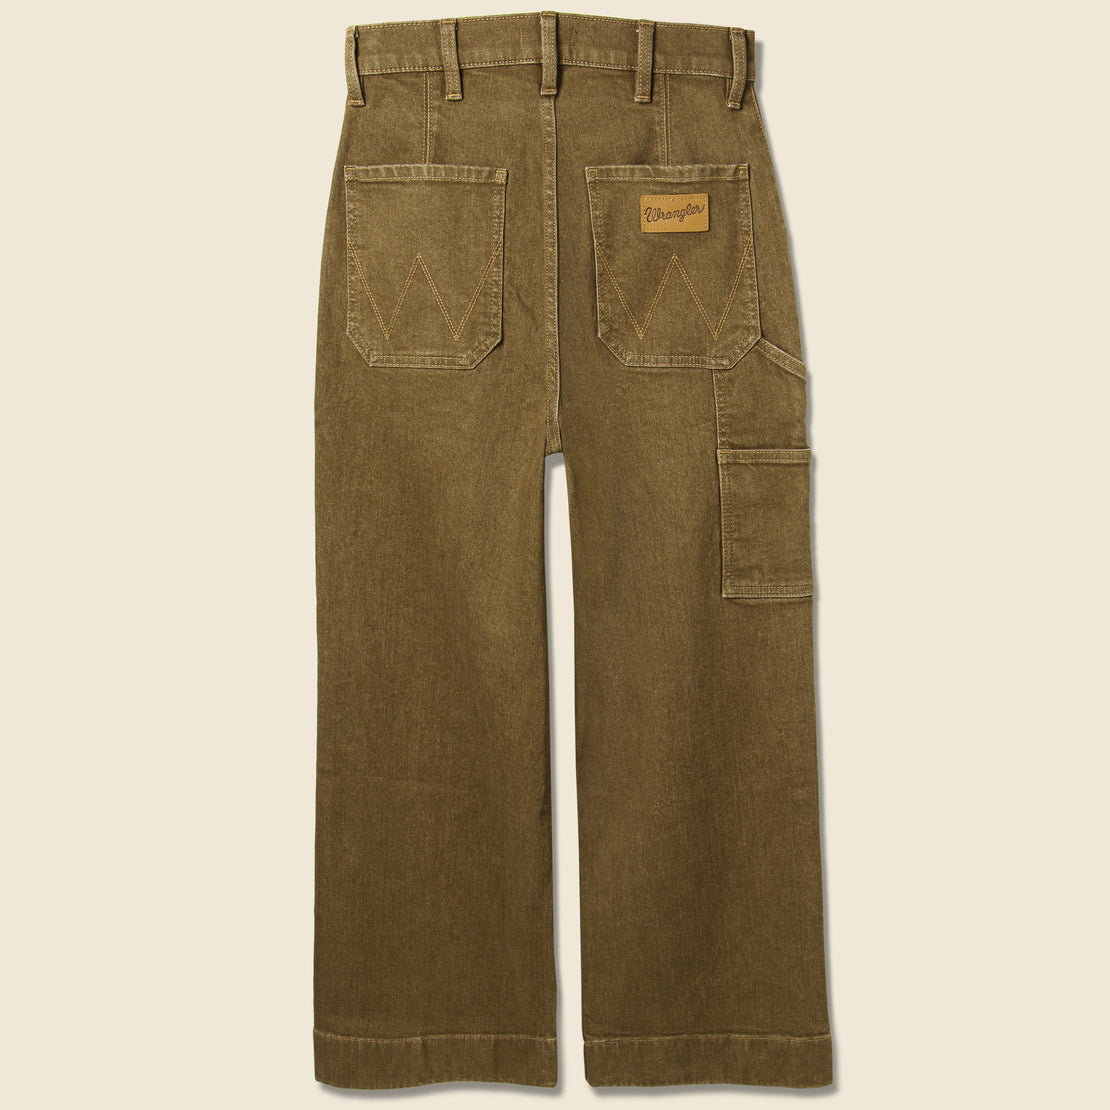 Premium Vintage Shorts & Pants - Wrangler Cargo Pants - Size 30